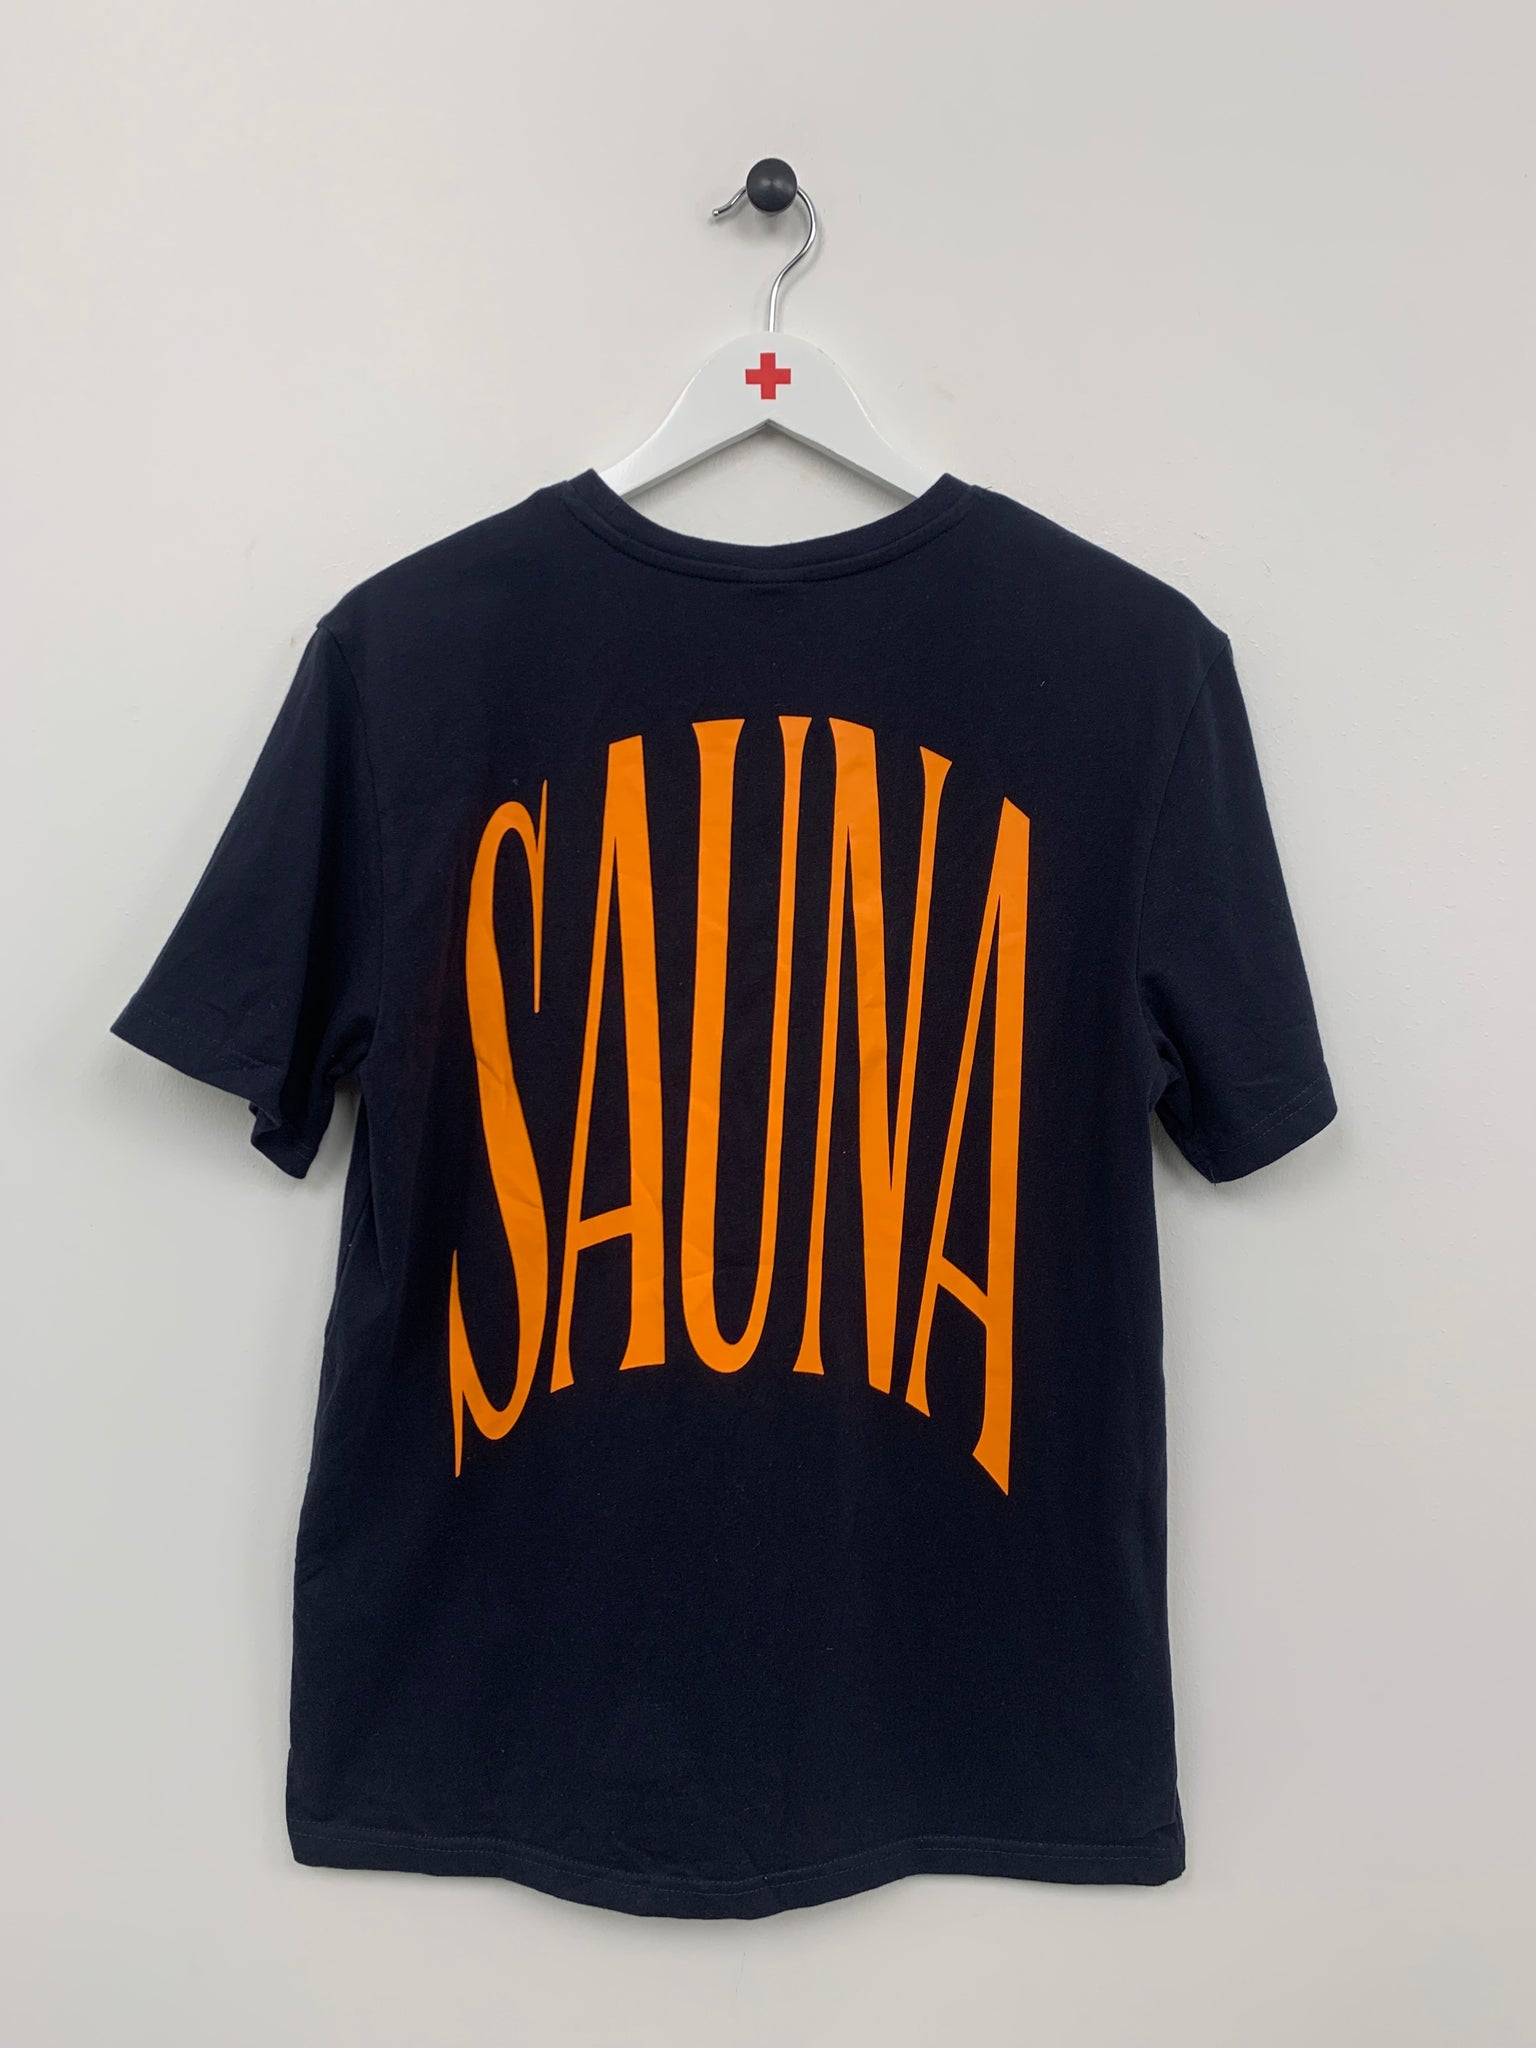 Sauna brand T-shirt